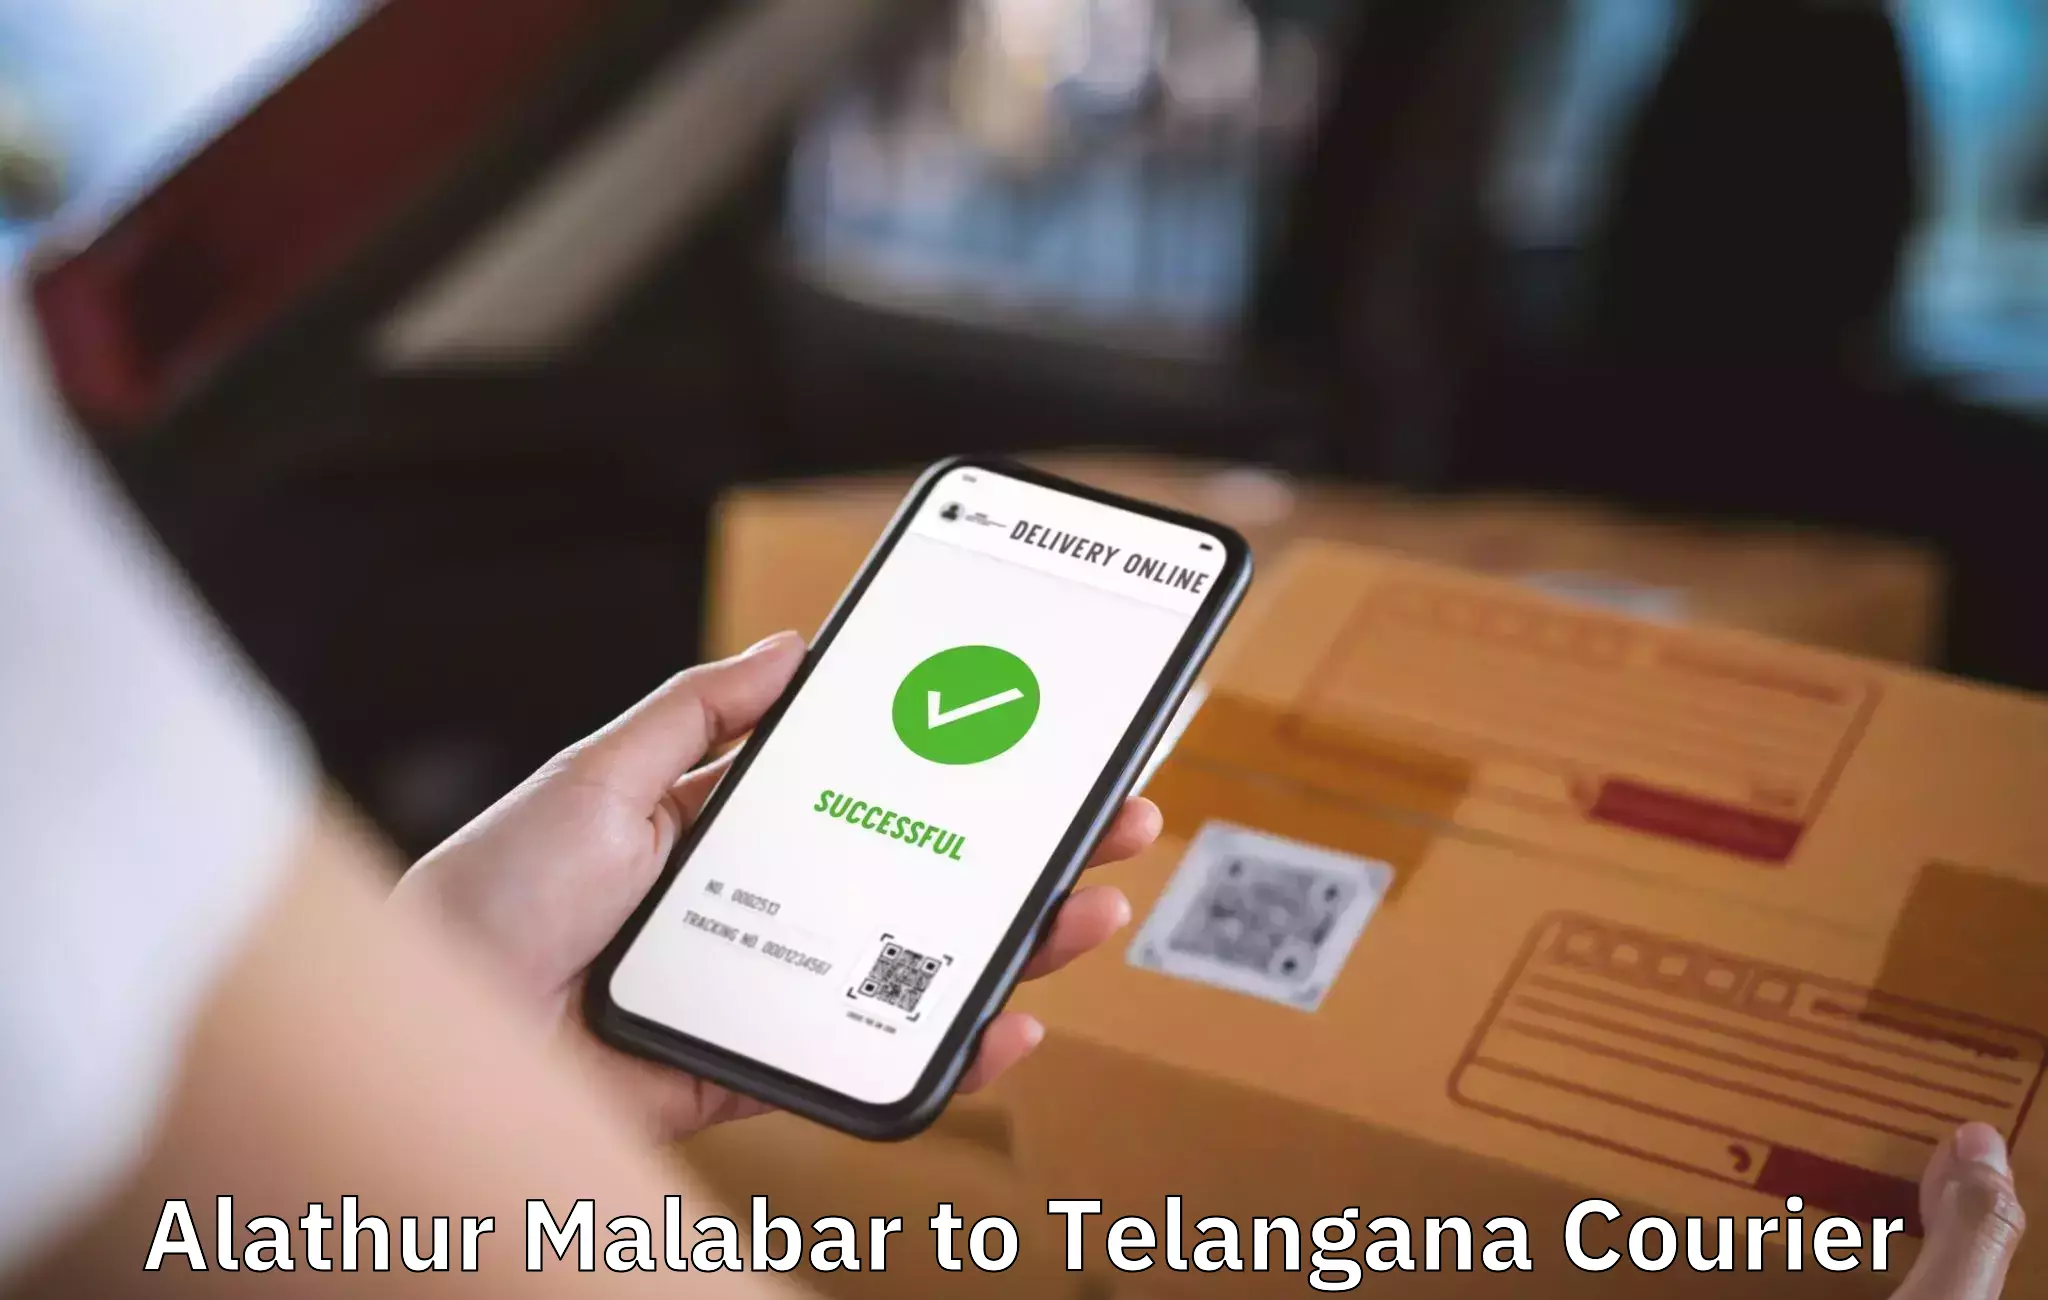 Furniture delivery service Alathur Malabar to Rangareddy